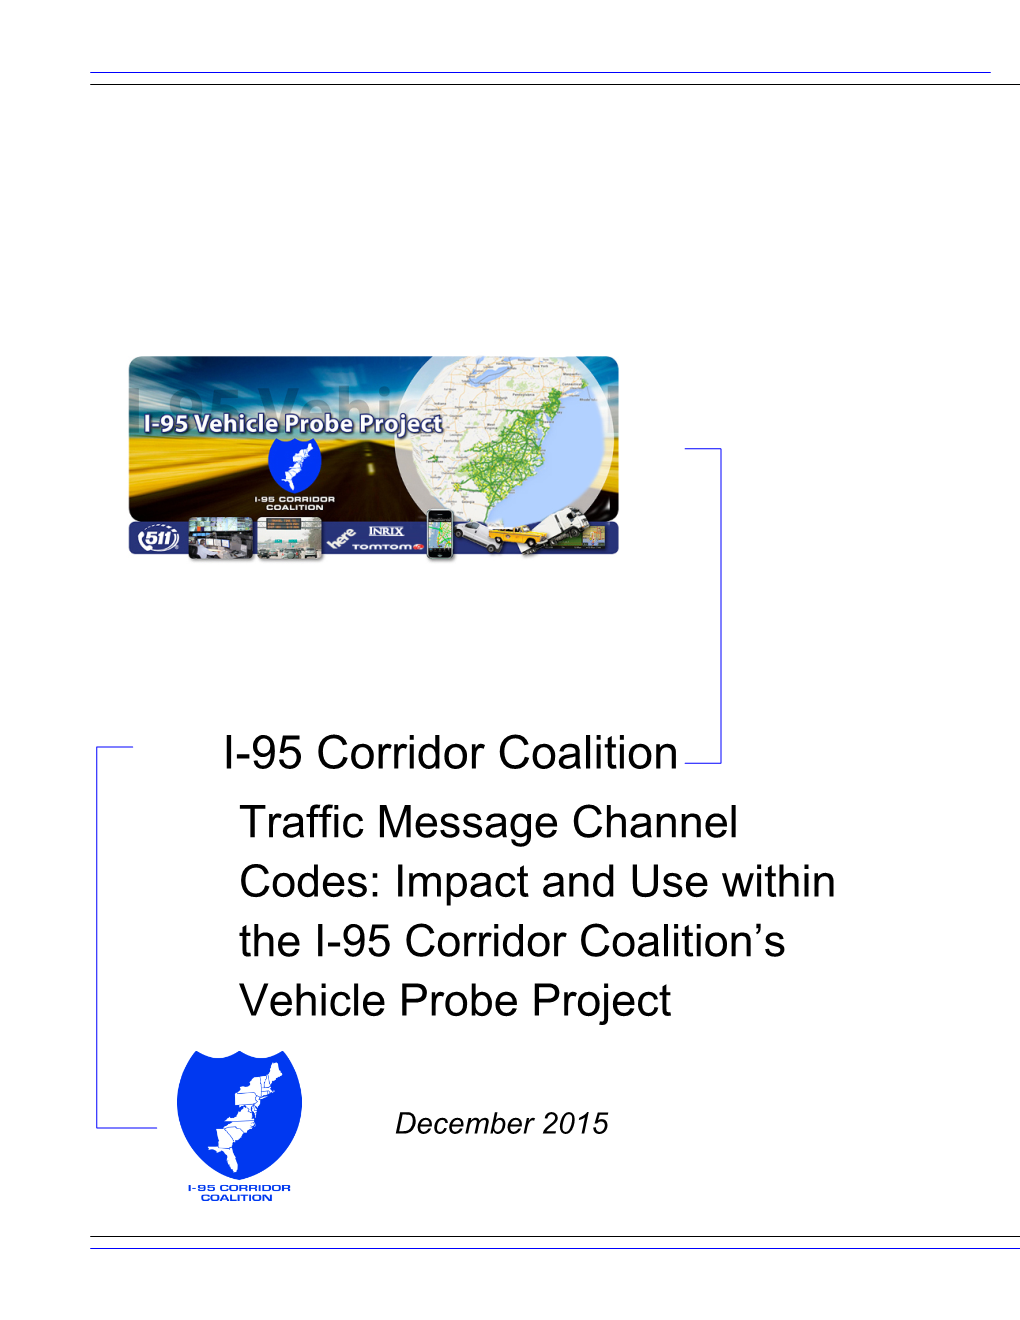 Impact and Use Within the I-95 Corridor Coalition's Vehicle Probe